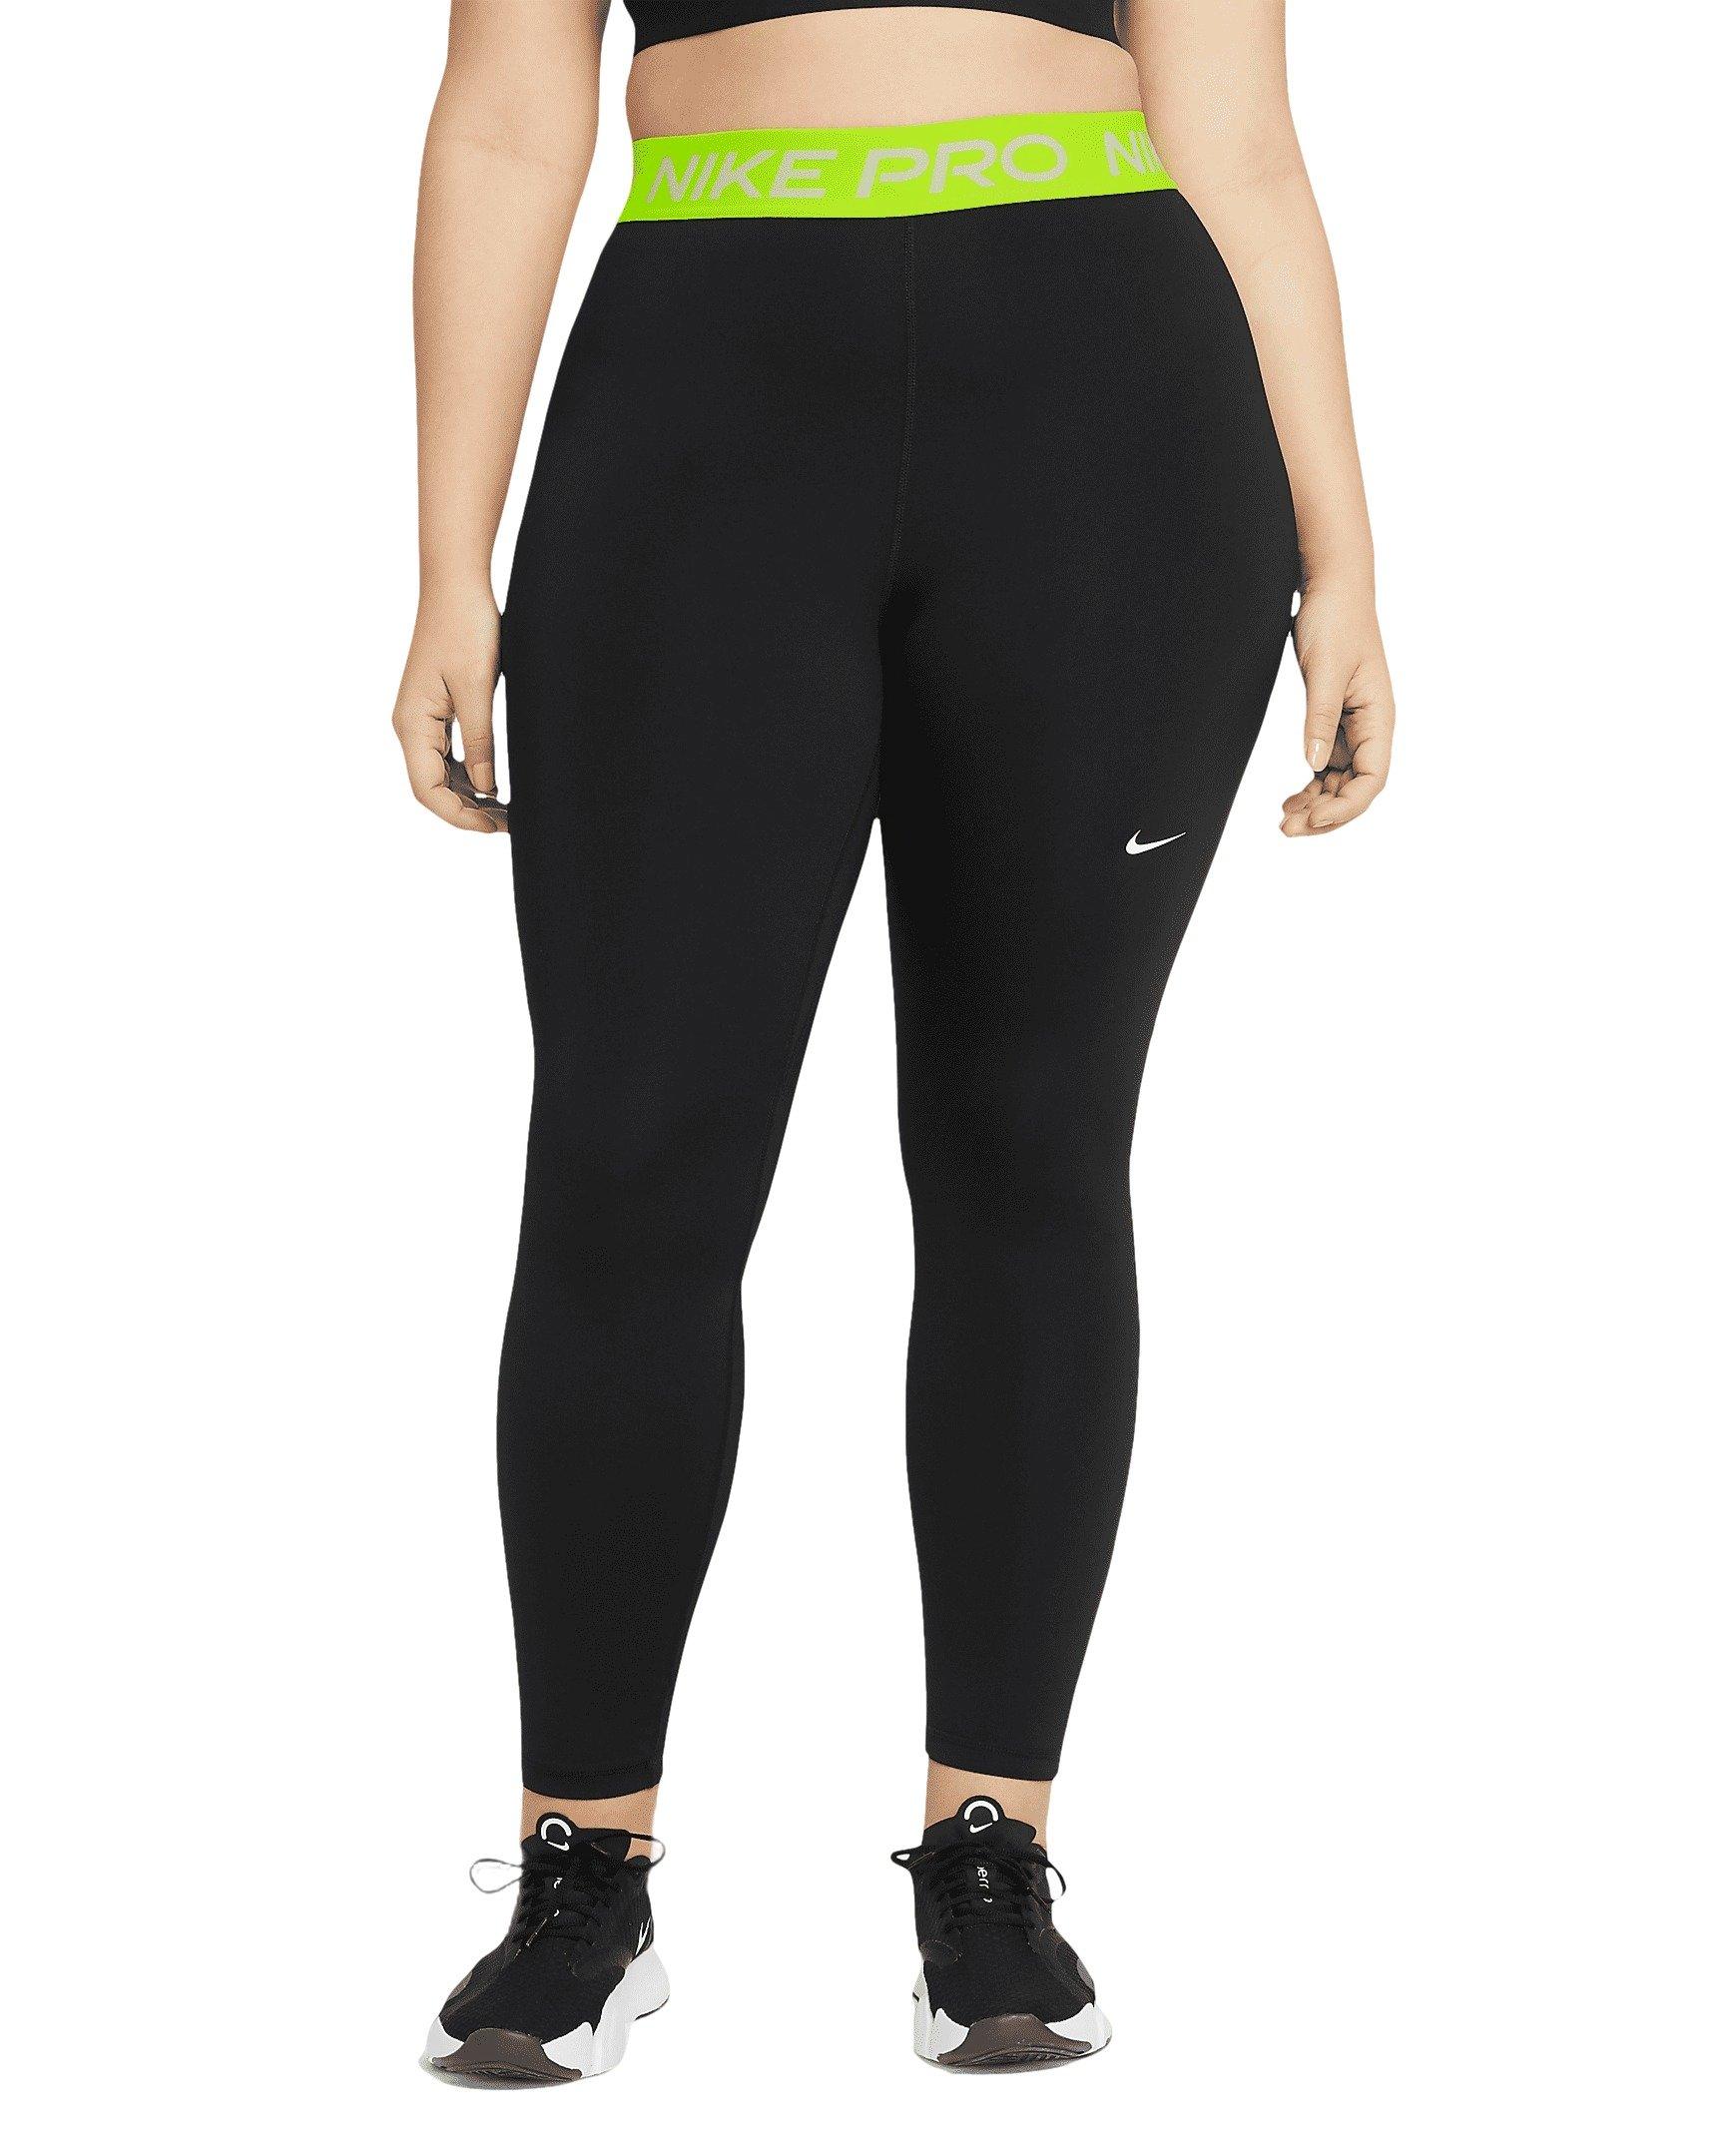 NWT Women's Nike Pro 365 Mid-Rise Cropped Mesh Panel Leggings S